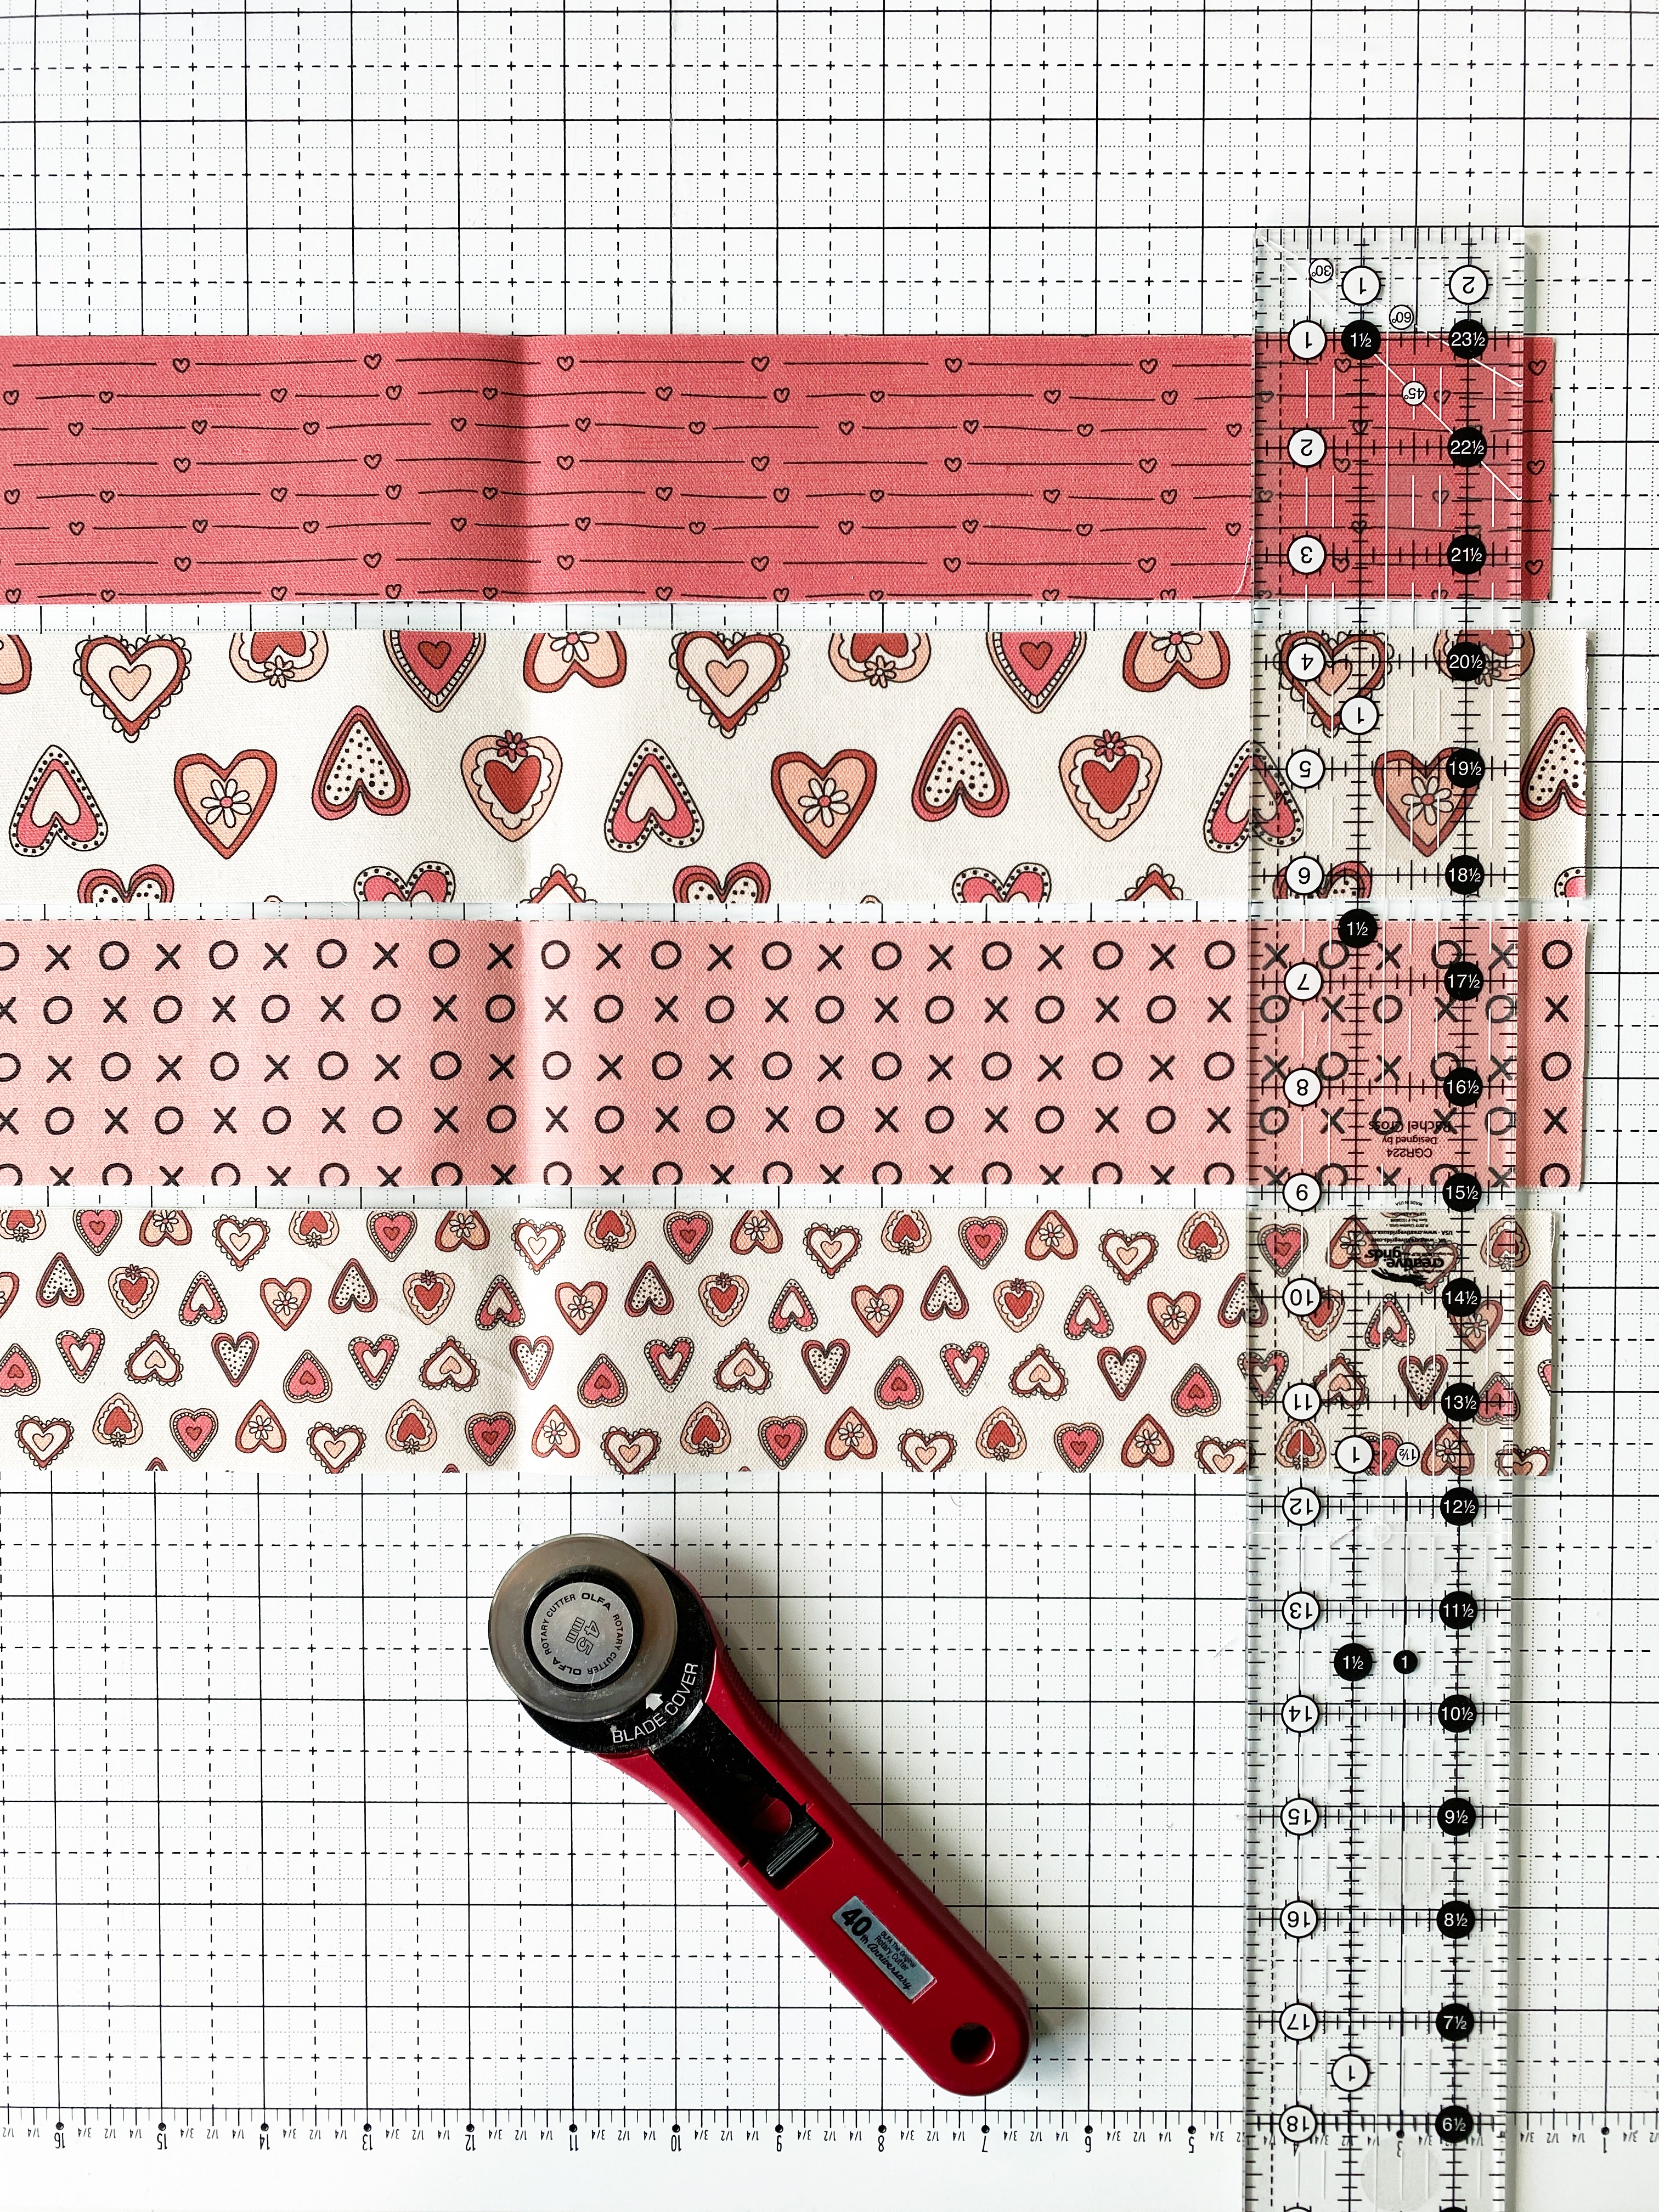 Valentine Mug Rugs: Cut the fabric